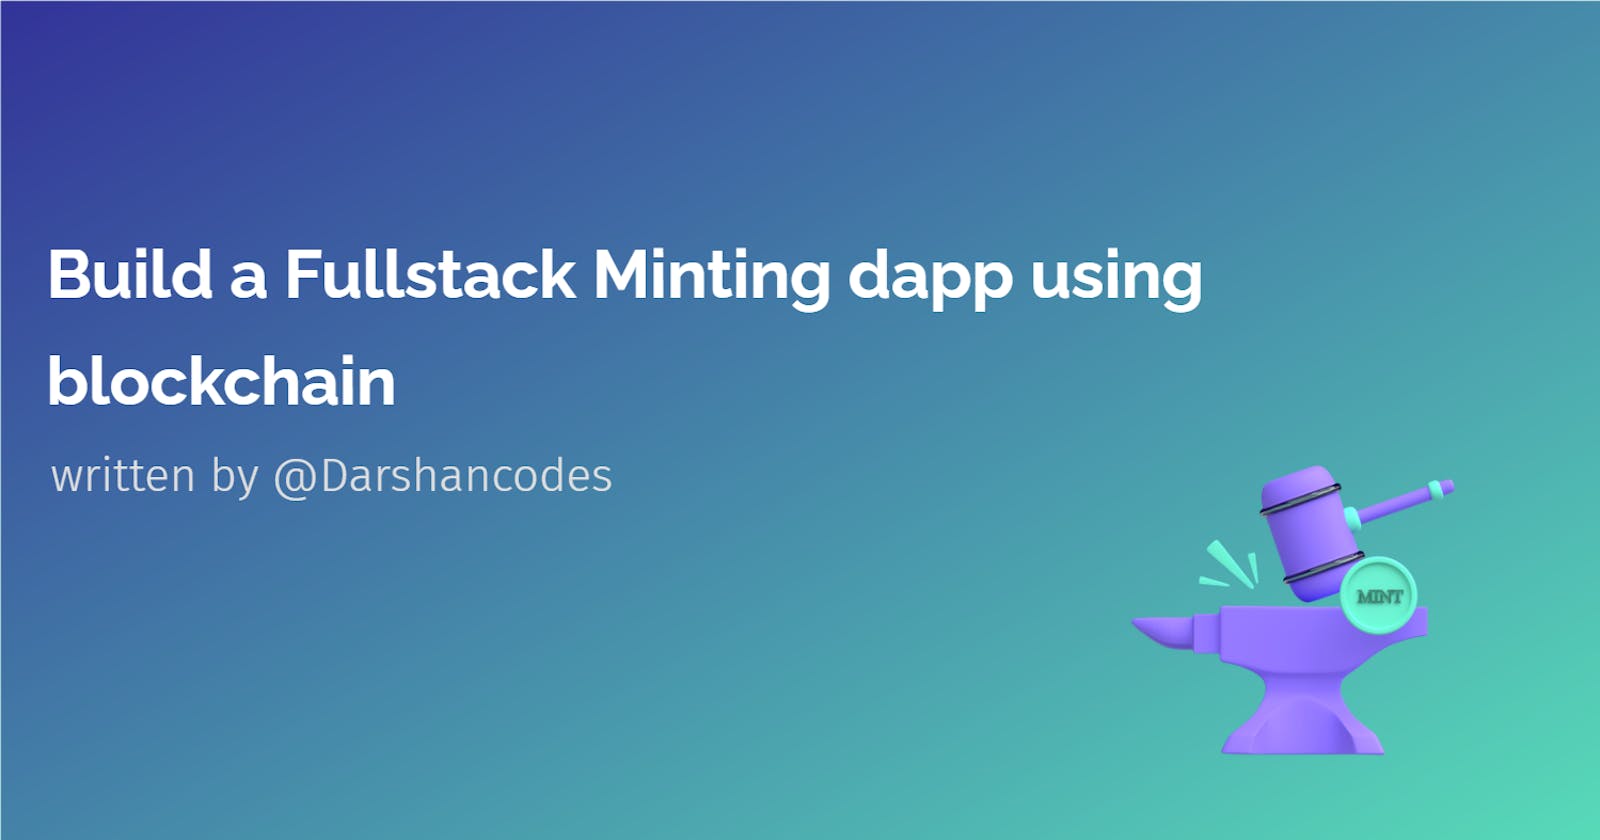 Let’s build a Fullstack Minting dapp using blockchain